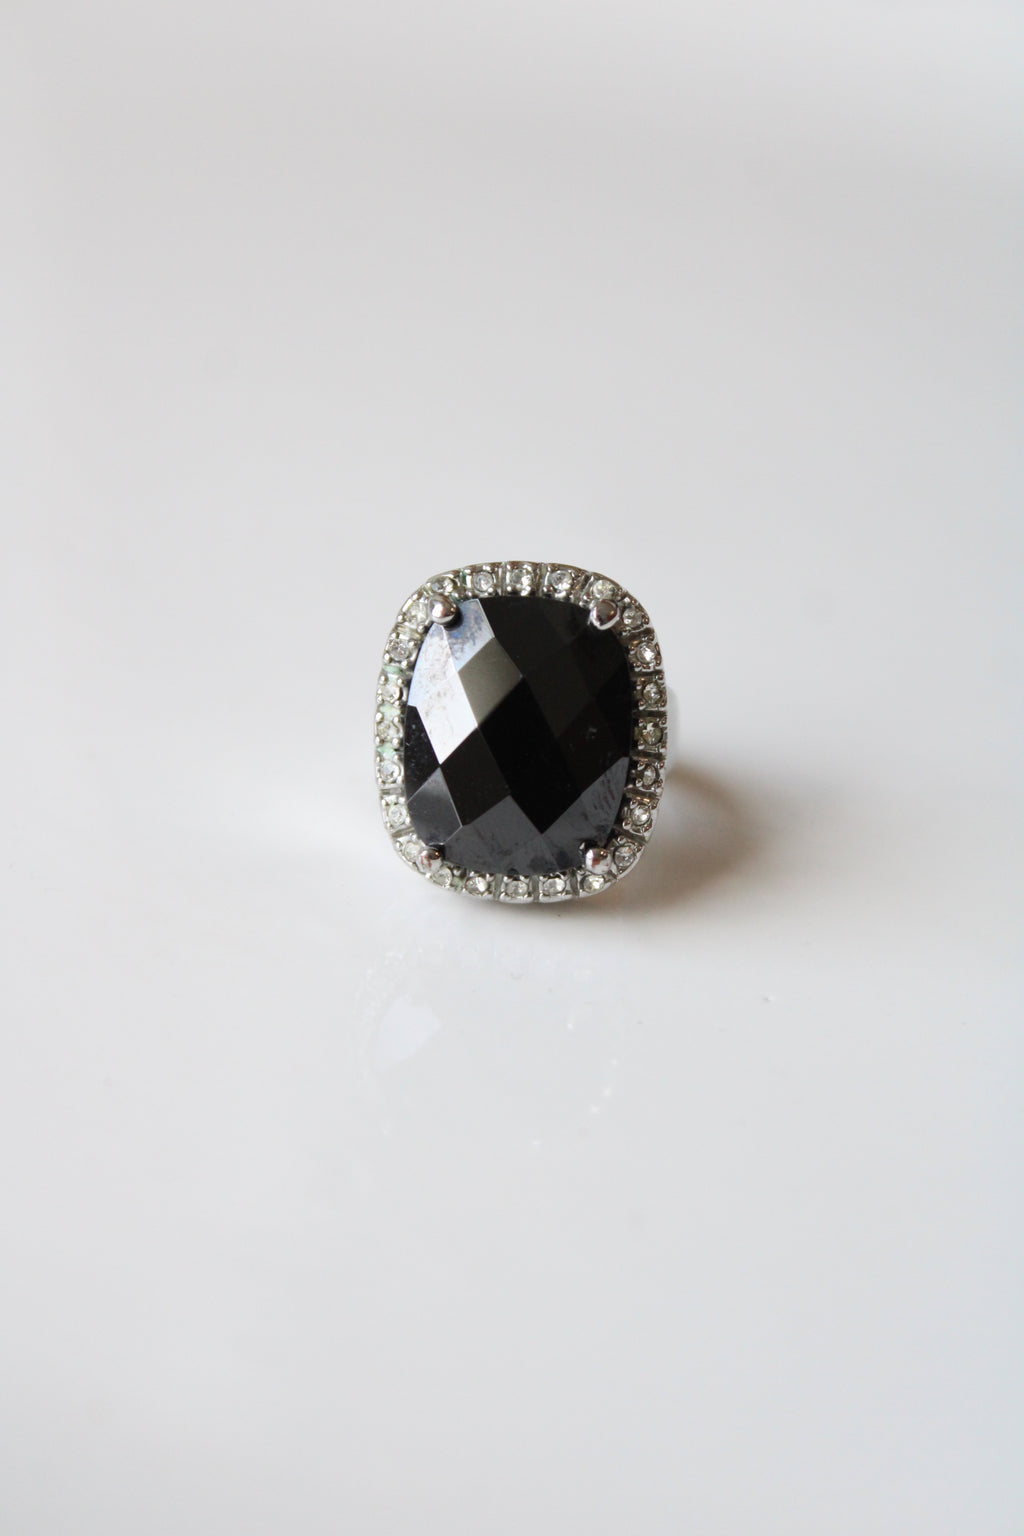 Silver Black Onyx Stone Ring | Size 7